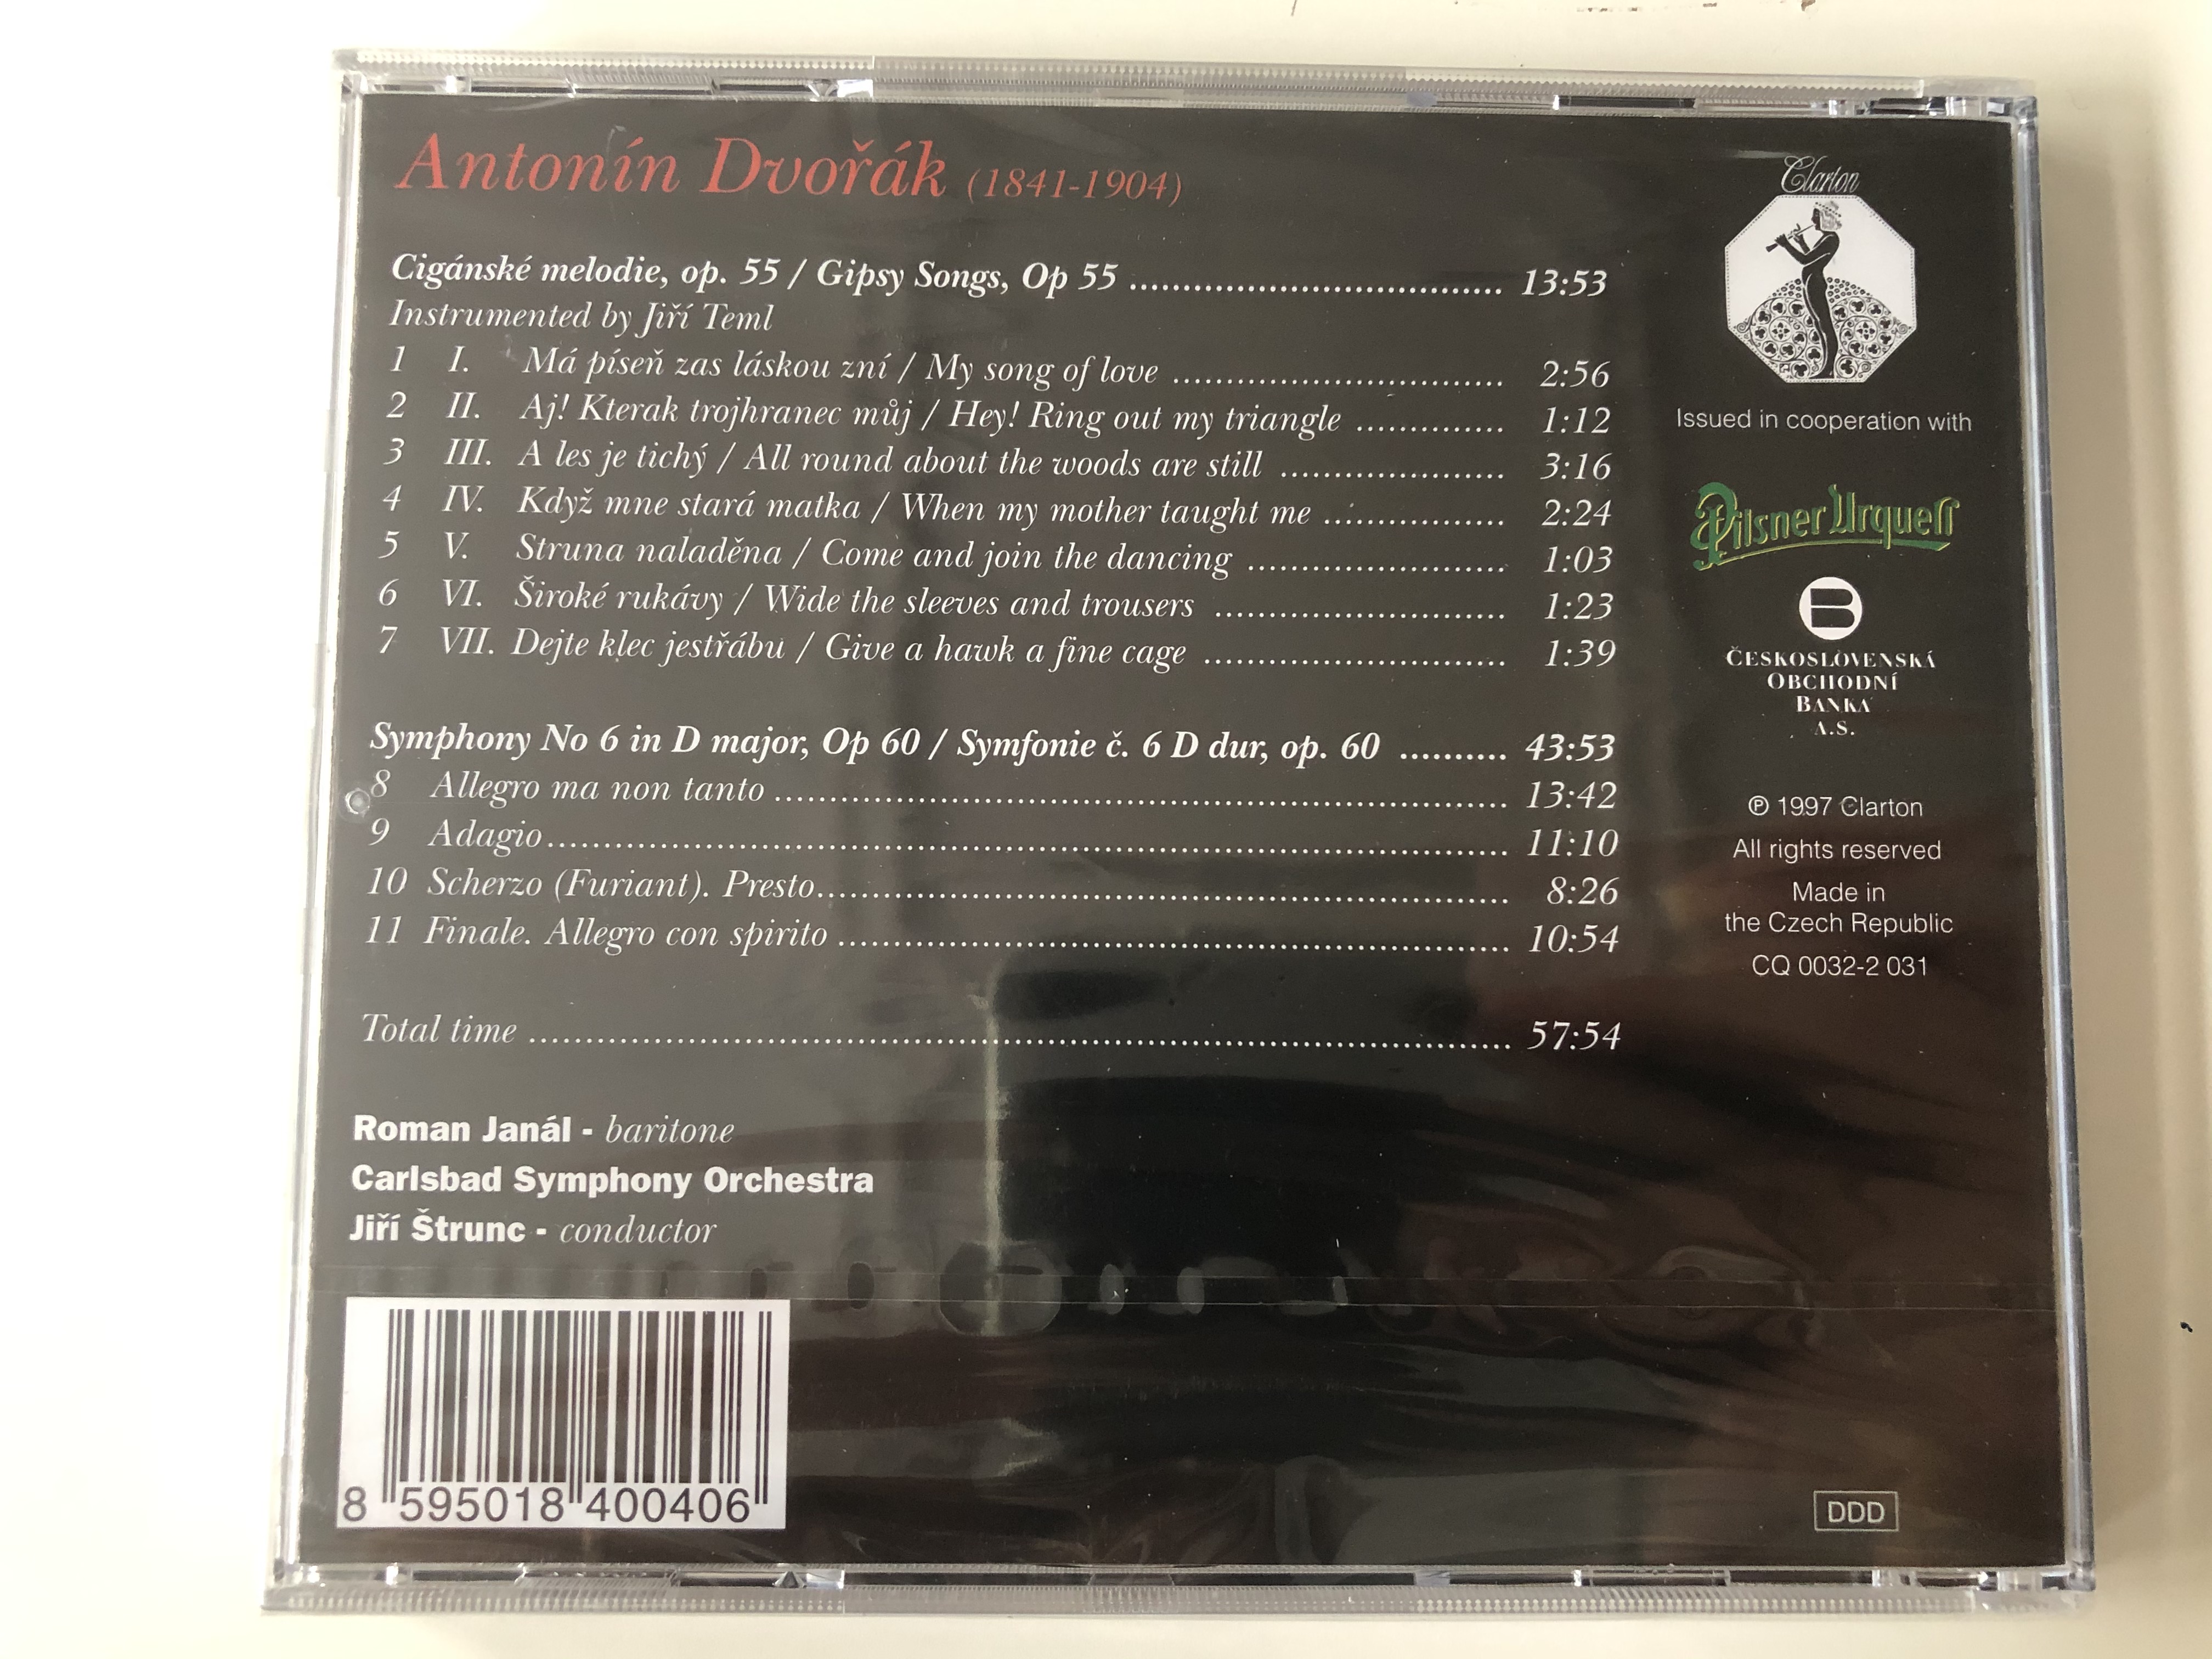 dvorak-gipsy-songs-symphony-no-6-in-d-major-roman-janal-baritone-jiri-trunc-conductor-carlsbad-symphony-orchestra-clarton-audio-cd-1997-cq-0032-2-031-2-.jpg